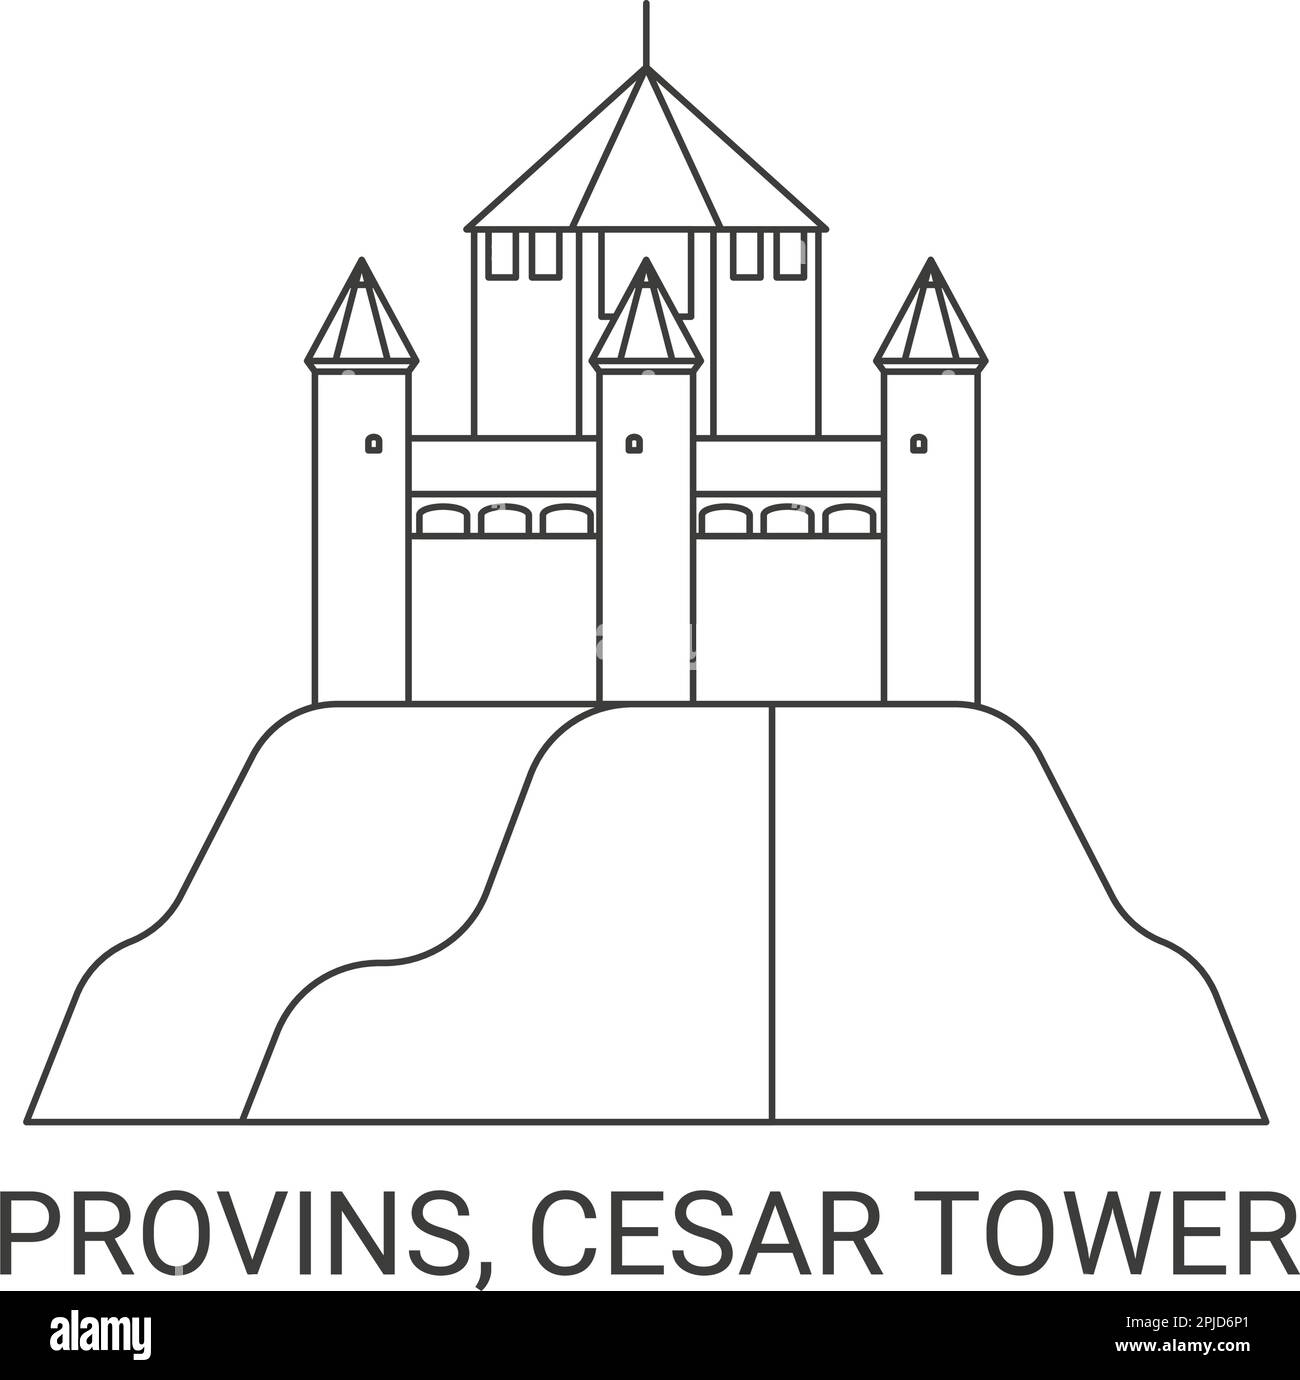 Francia, Provins, C, SAR Tower viaggio riferimento vettoriale illustrazione Illustrazione Vettoriale